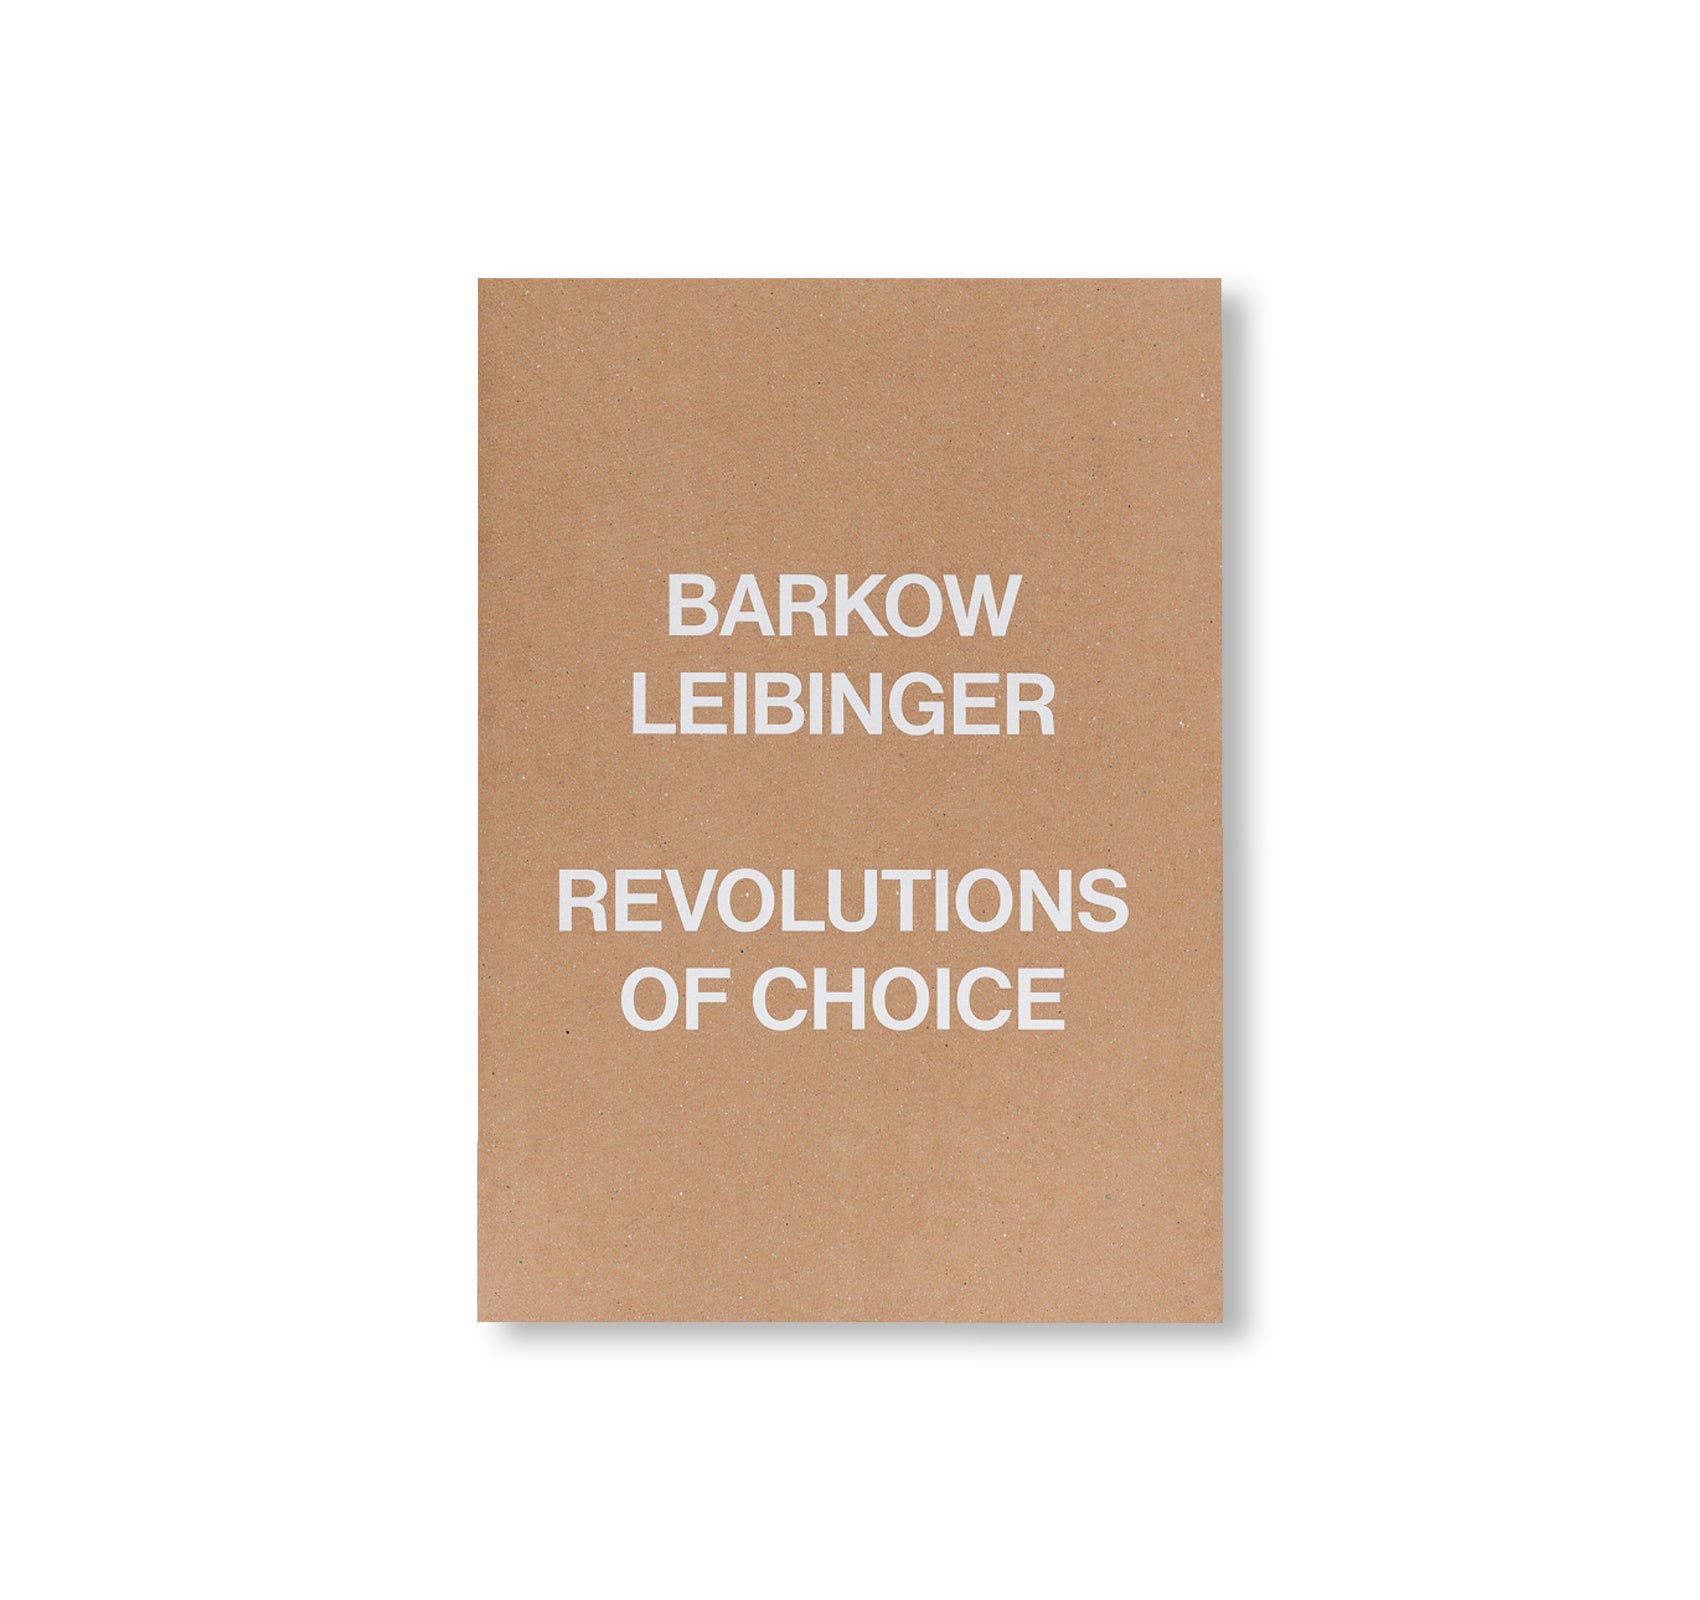 REVOLUTIONS OF CHOICE by Barkow Leibinger